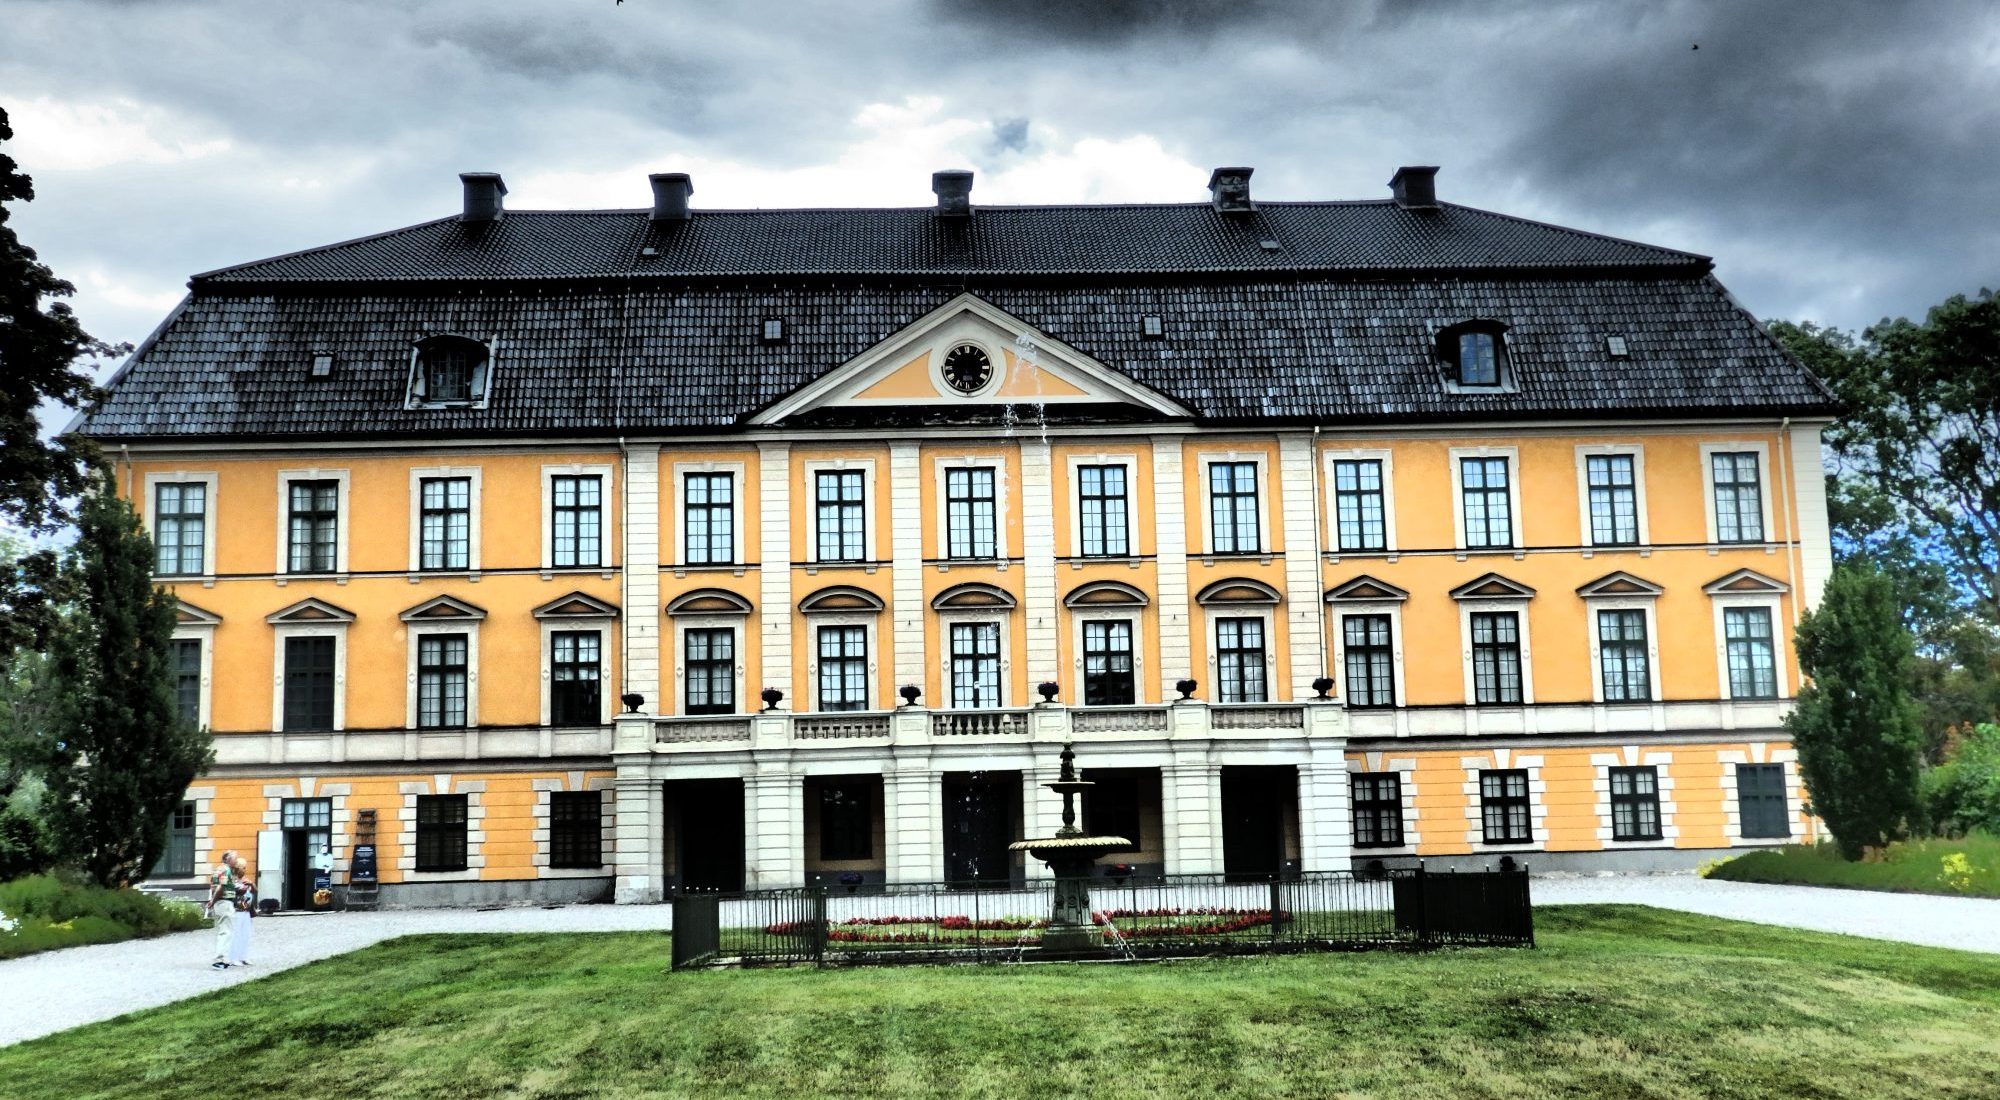 the manor house at Nynäs